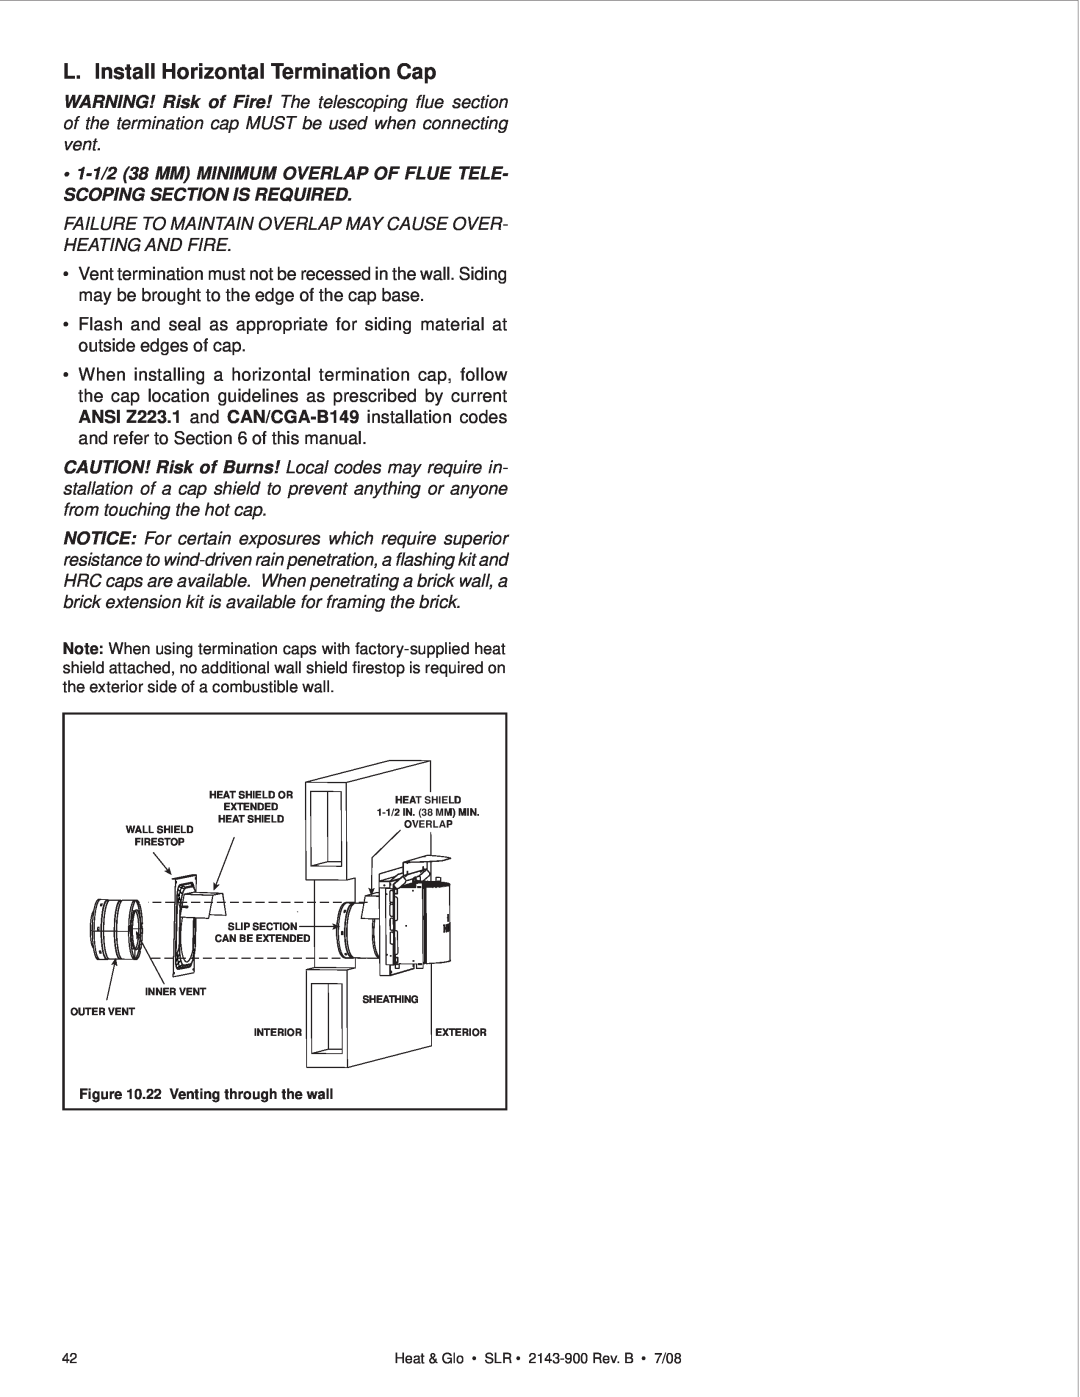 Heat & Glo LifeStyle SLR (COSMO) L. Install Horizontal Termination Cap, •1-1/238 MM MINIMUM OVERLAP OF FLUE TELE 